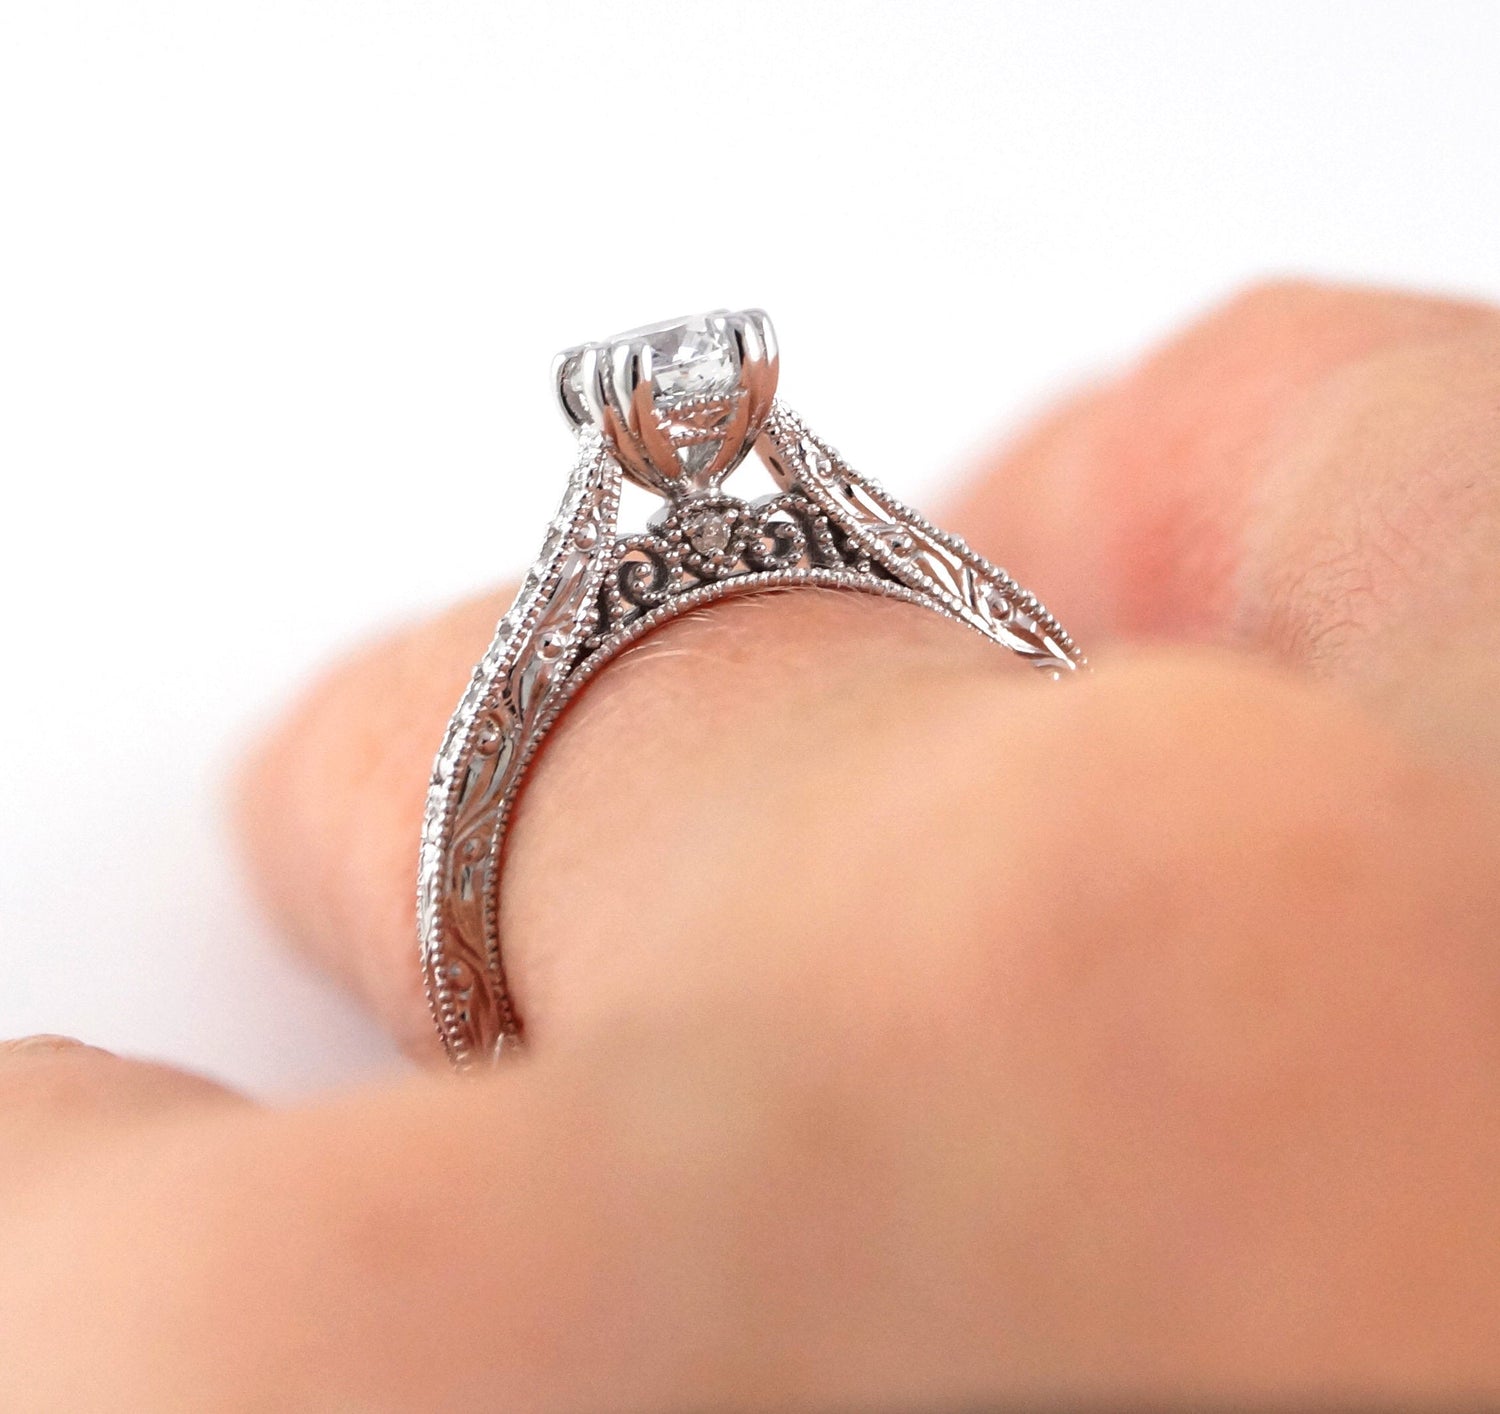 Victorian Inspired Disney Princess Ring Vintage Antique White Gold Diamond Engagement Ring Millgrain Scrollwork Carriage Engraving Rickson